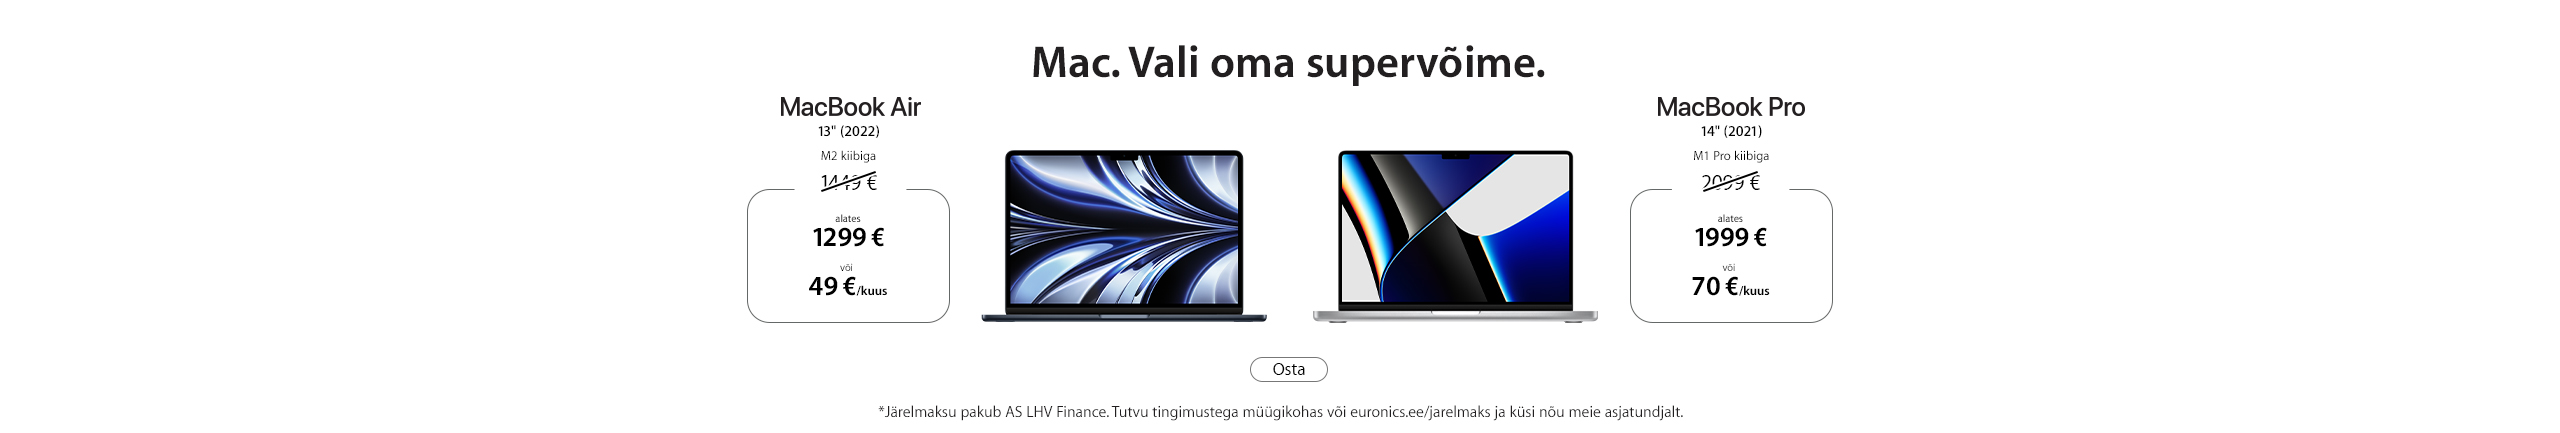 Apple special offers. MacBook Air & iMac